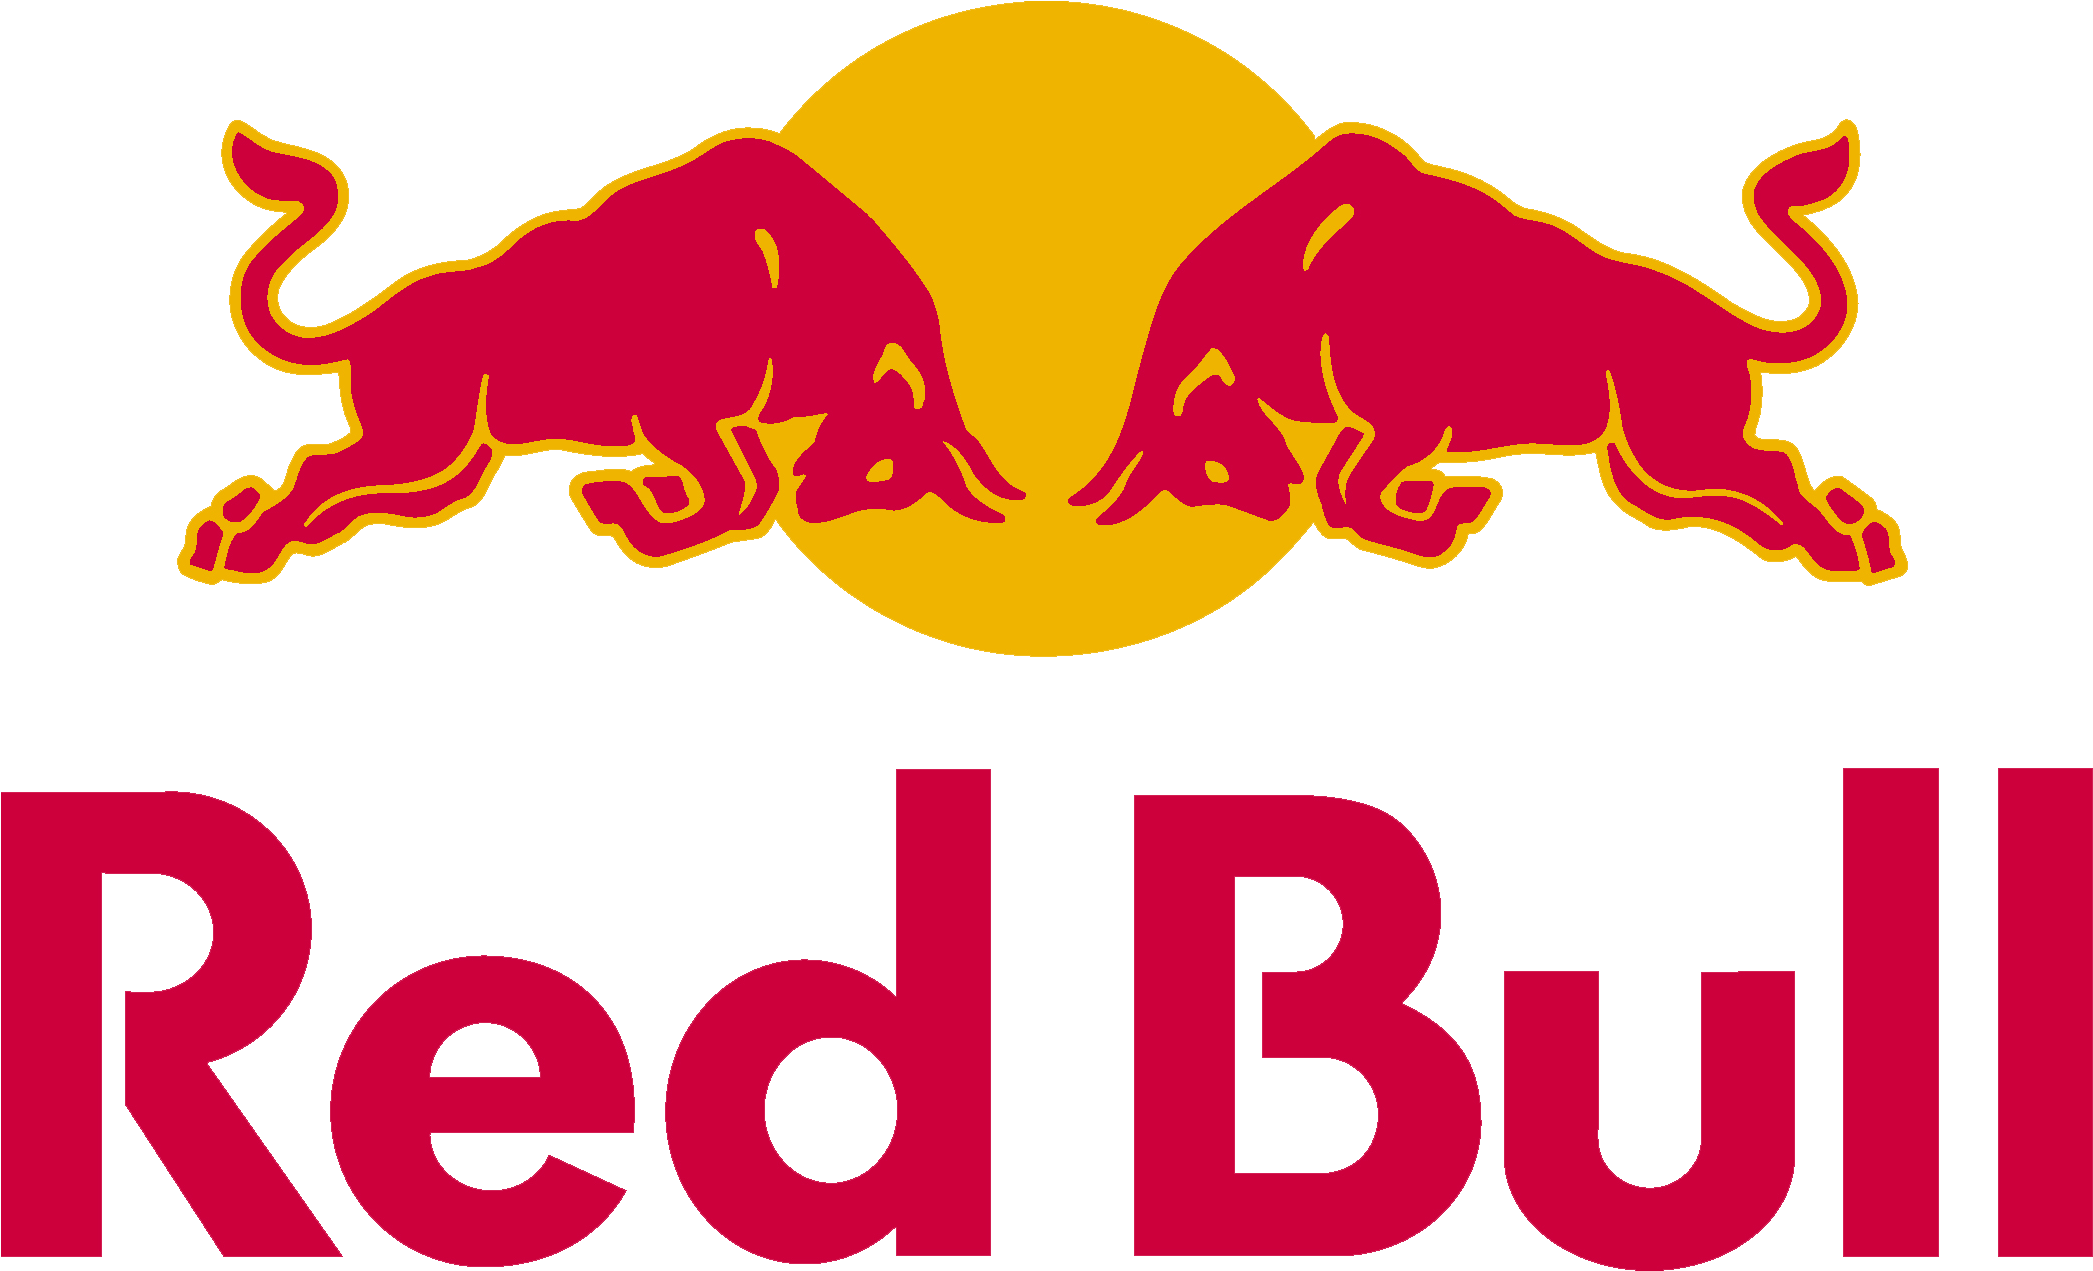 Printed vinyl Red Bull